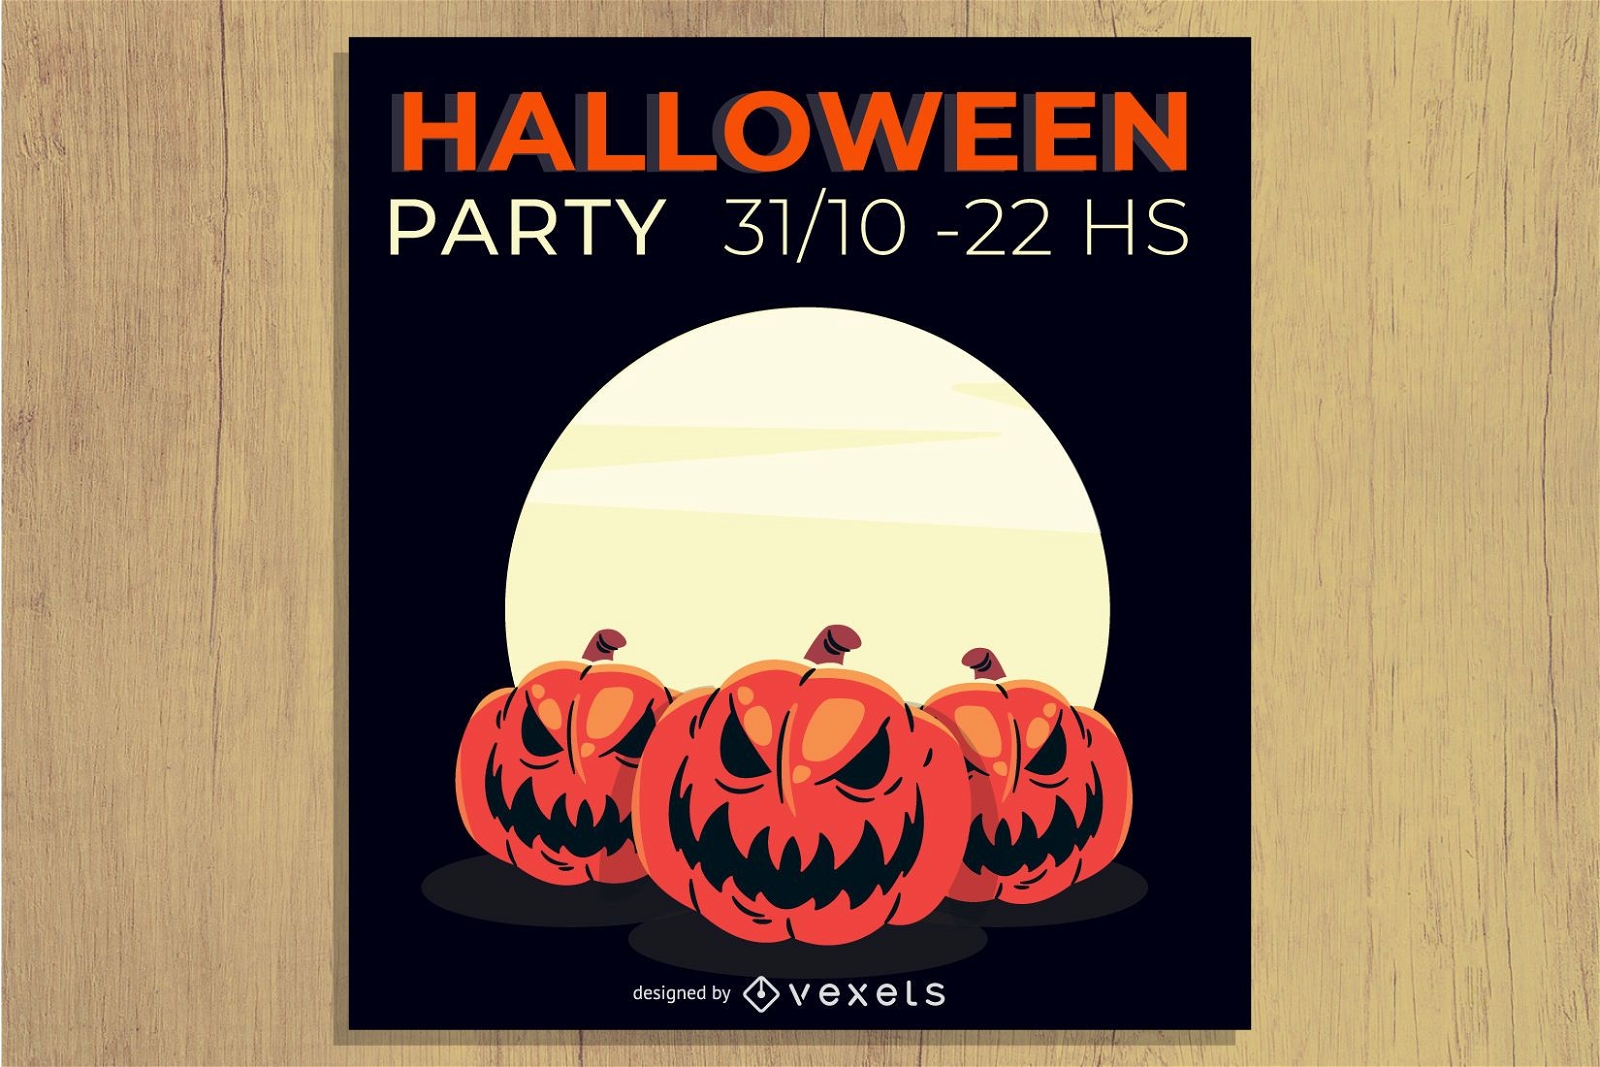 Horrifying Halloween party flyer